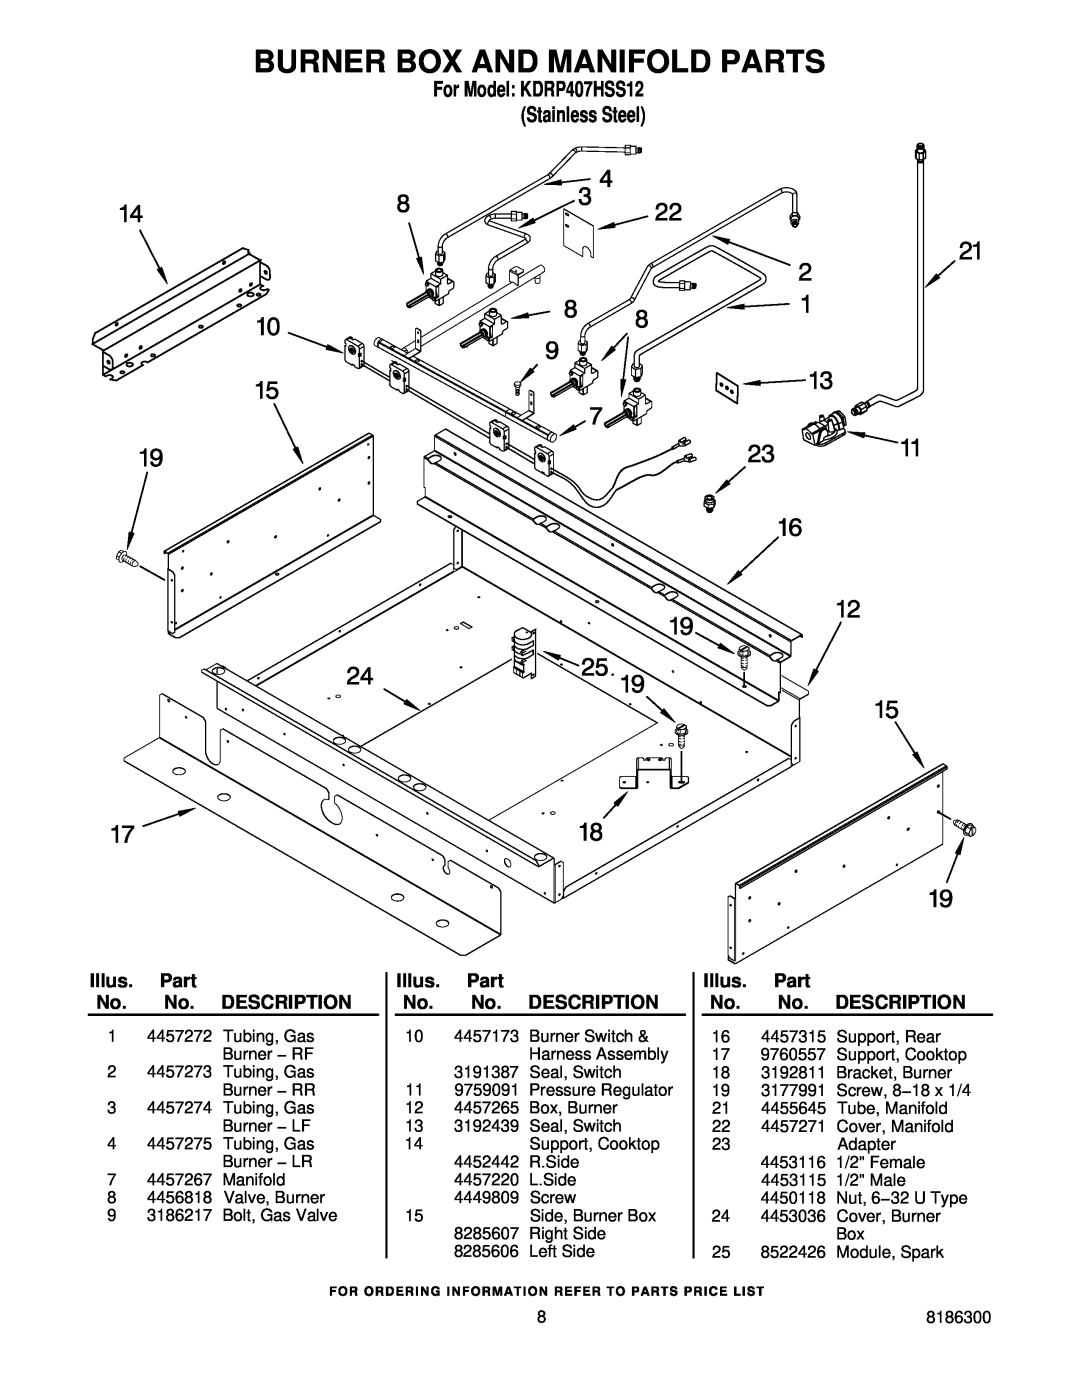 KitchenAid manual Burner Box And Manifold Parts, For Model KDRP407HSS12 Stainless Steel, Illus. Part No. No. DESCRIPTION 